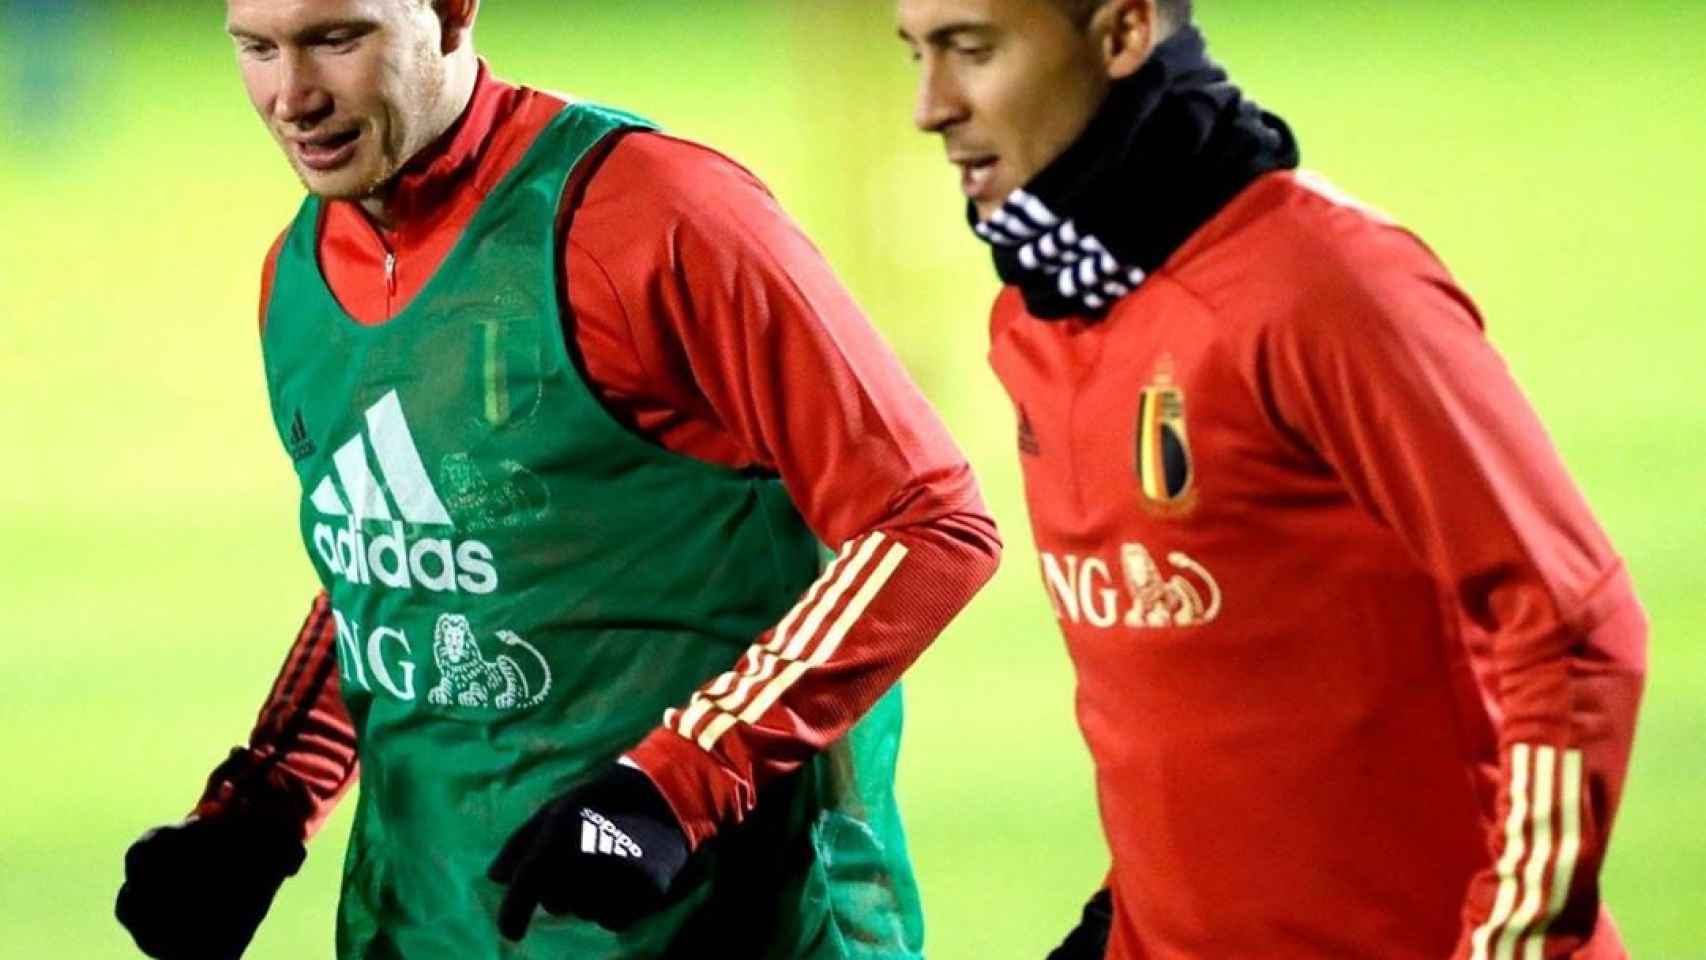 Eden Hazard entrena junto a Kevin De Bruyne con Bélgica